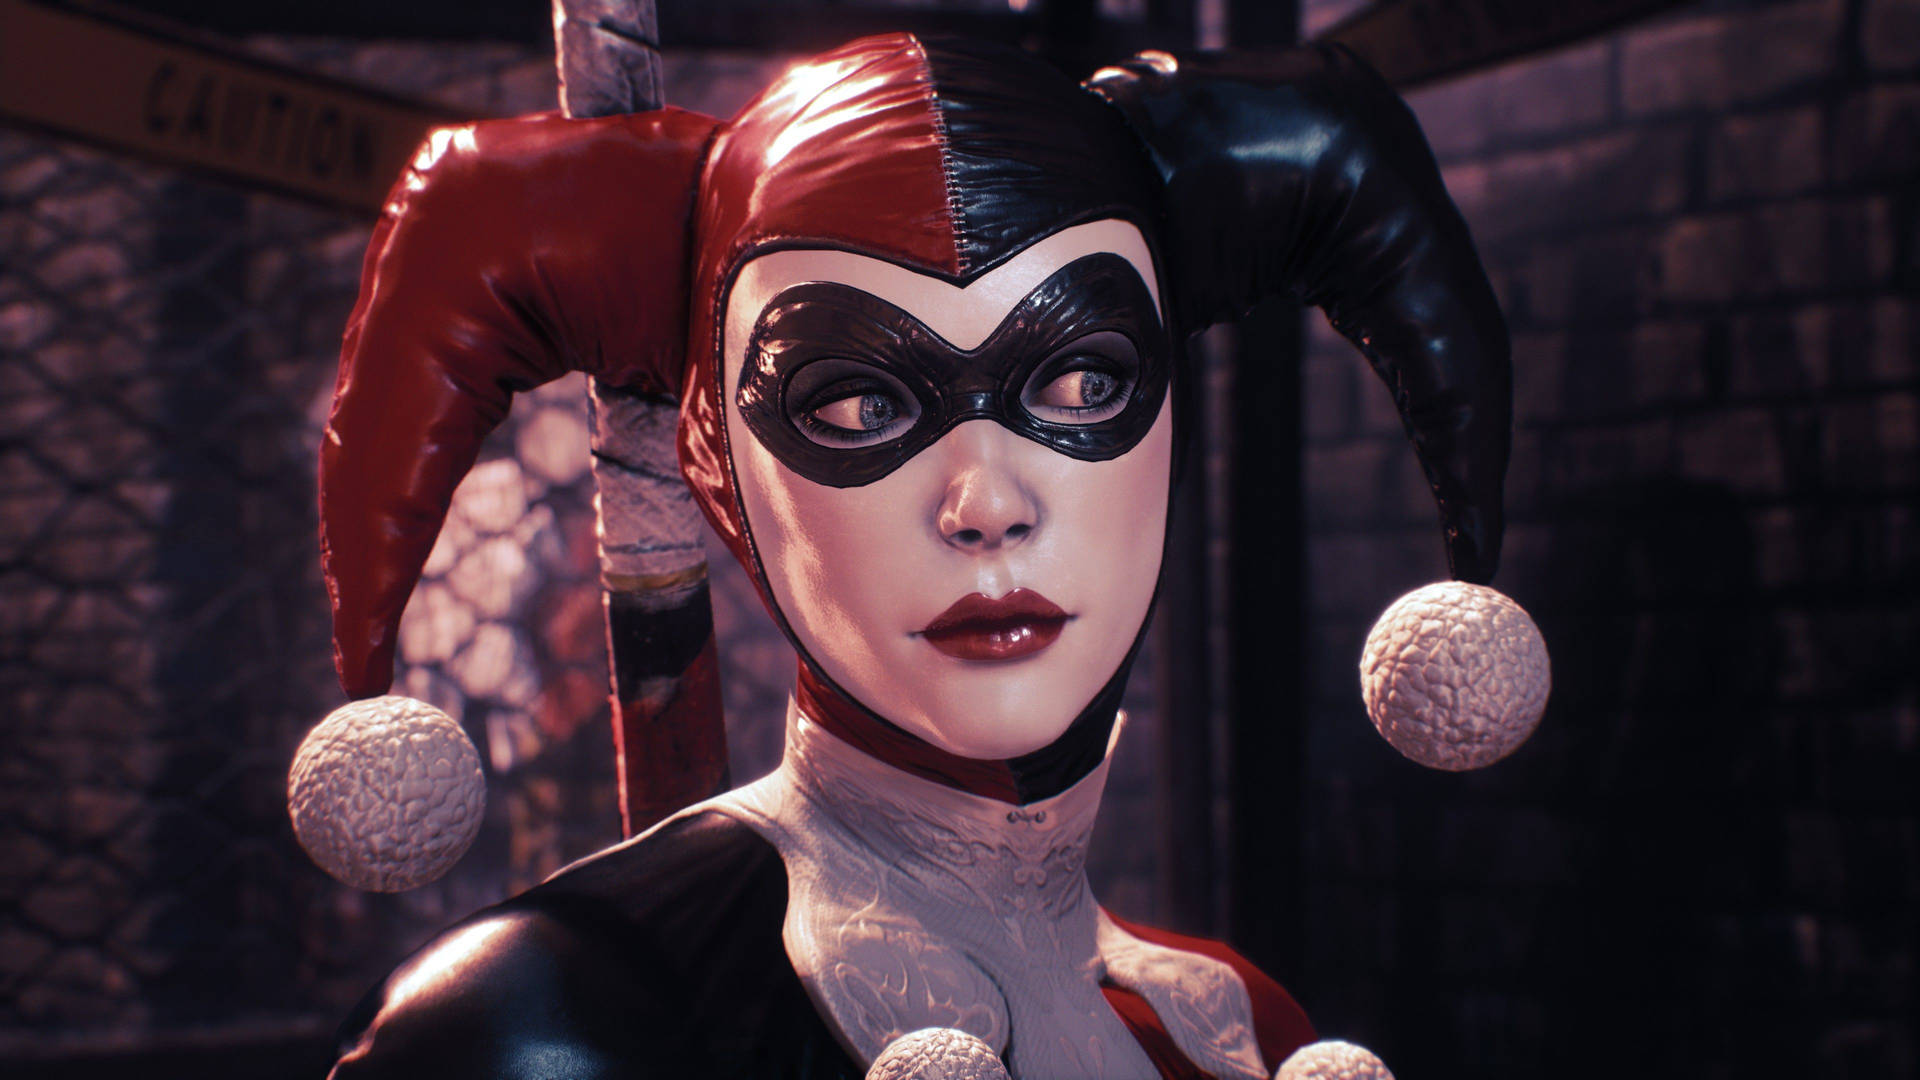 Harley Quinn's iconic clown look. Wallpaper